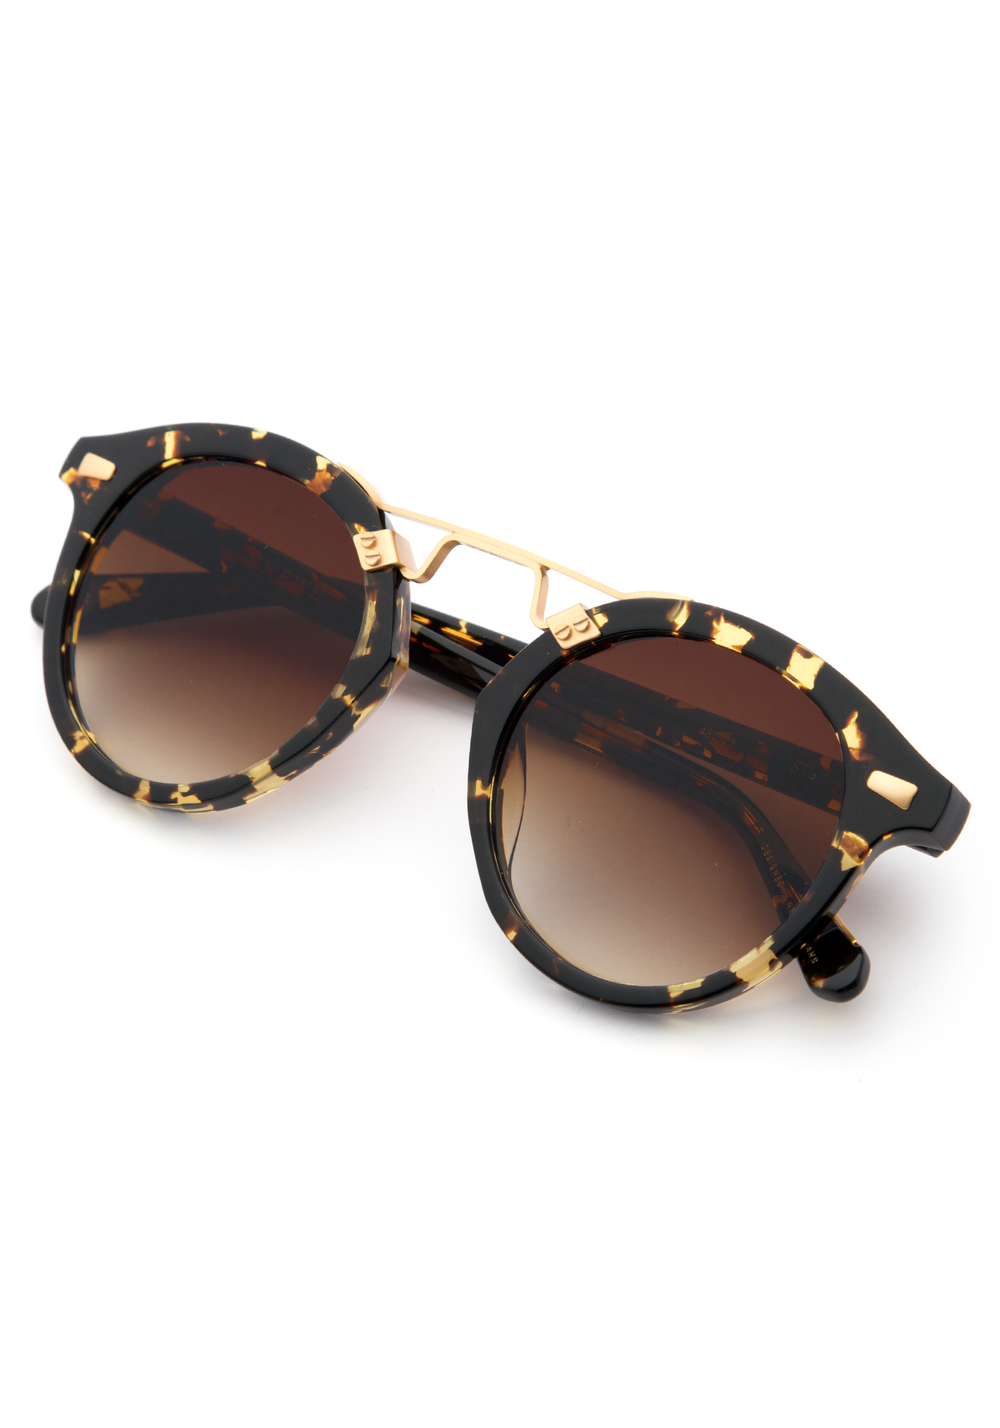 STL II | Zulu 24K - round Sunglasses handcrafted from Luxury tortoise acetate featuring 24K gold hardware